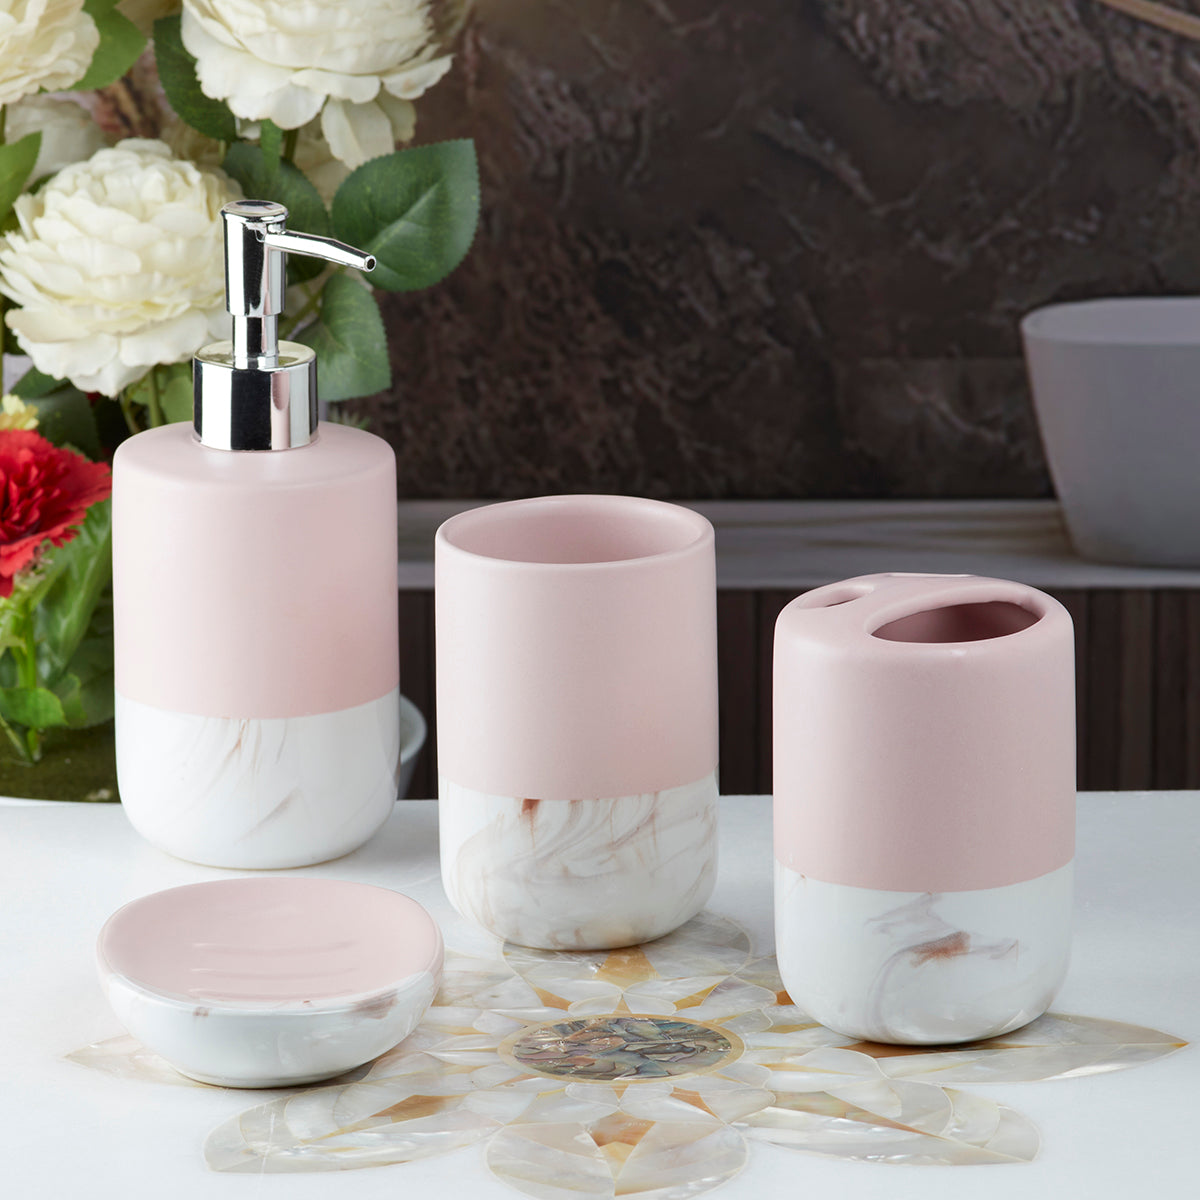 Ceramic Bathroom Accessories Set of 4 Bath Set with Soap Dispenser (9634)